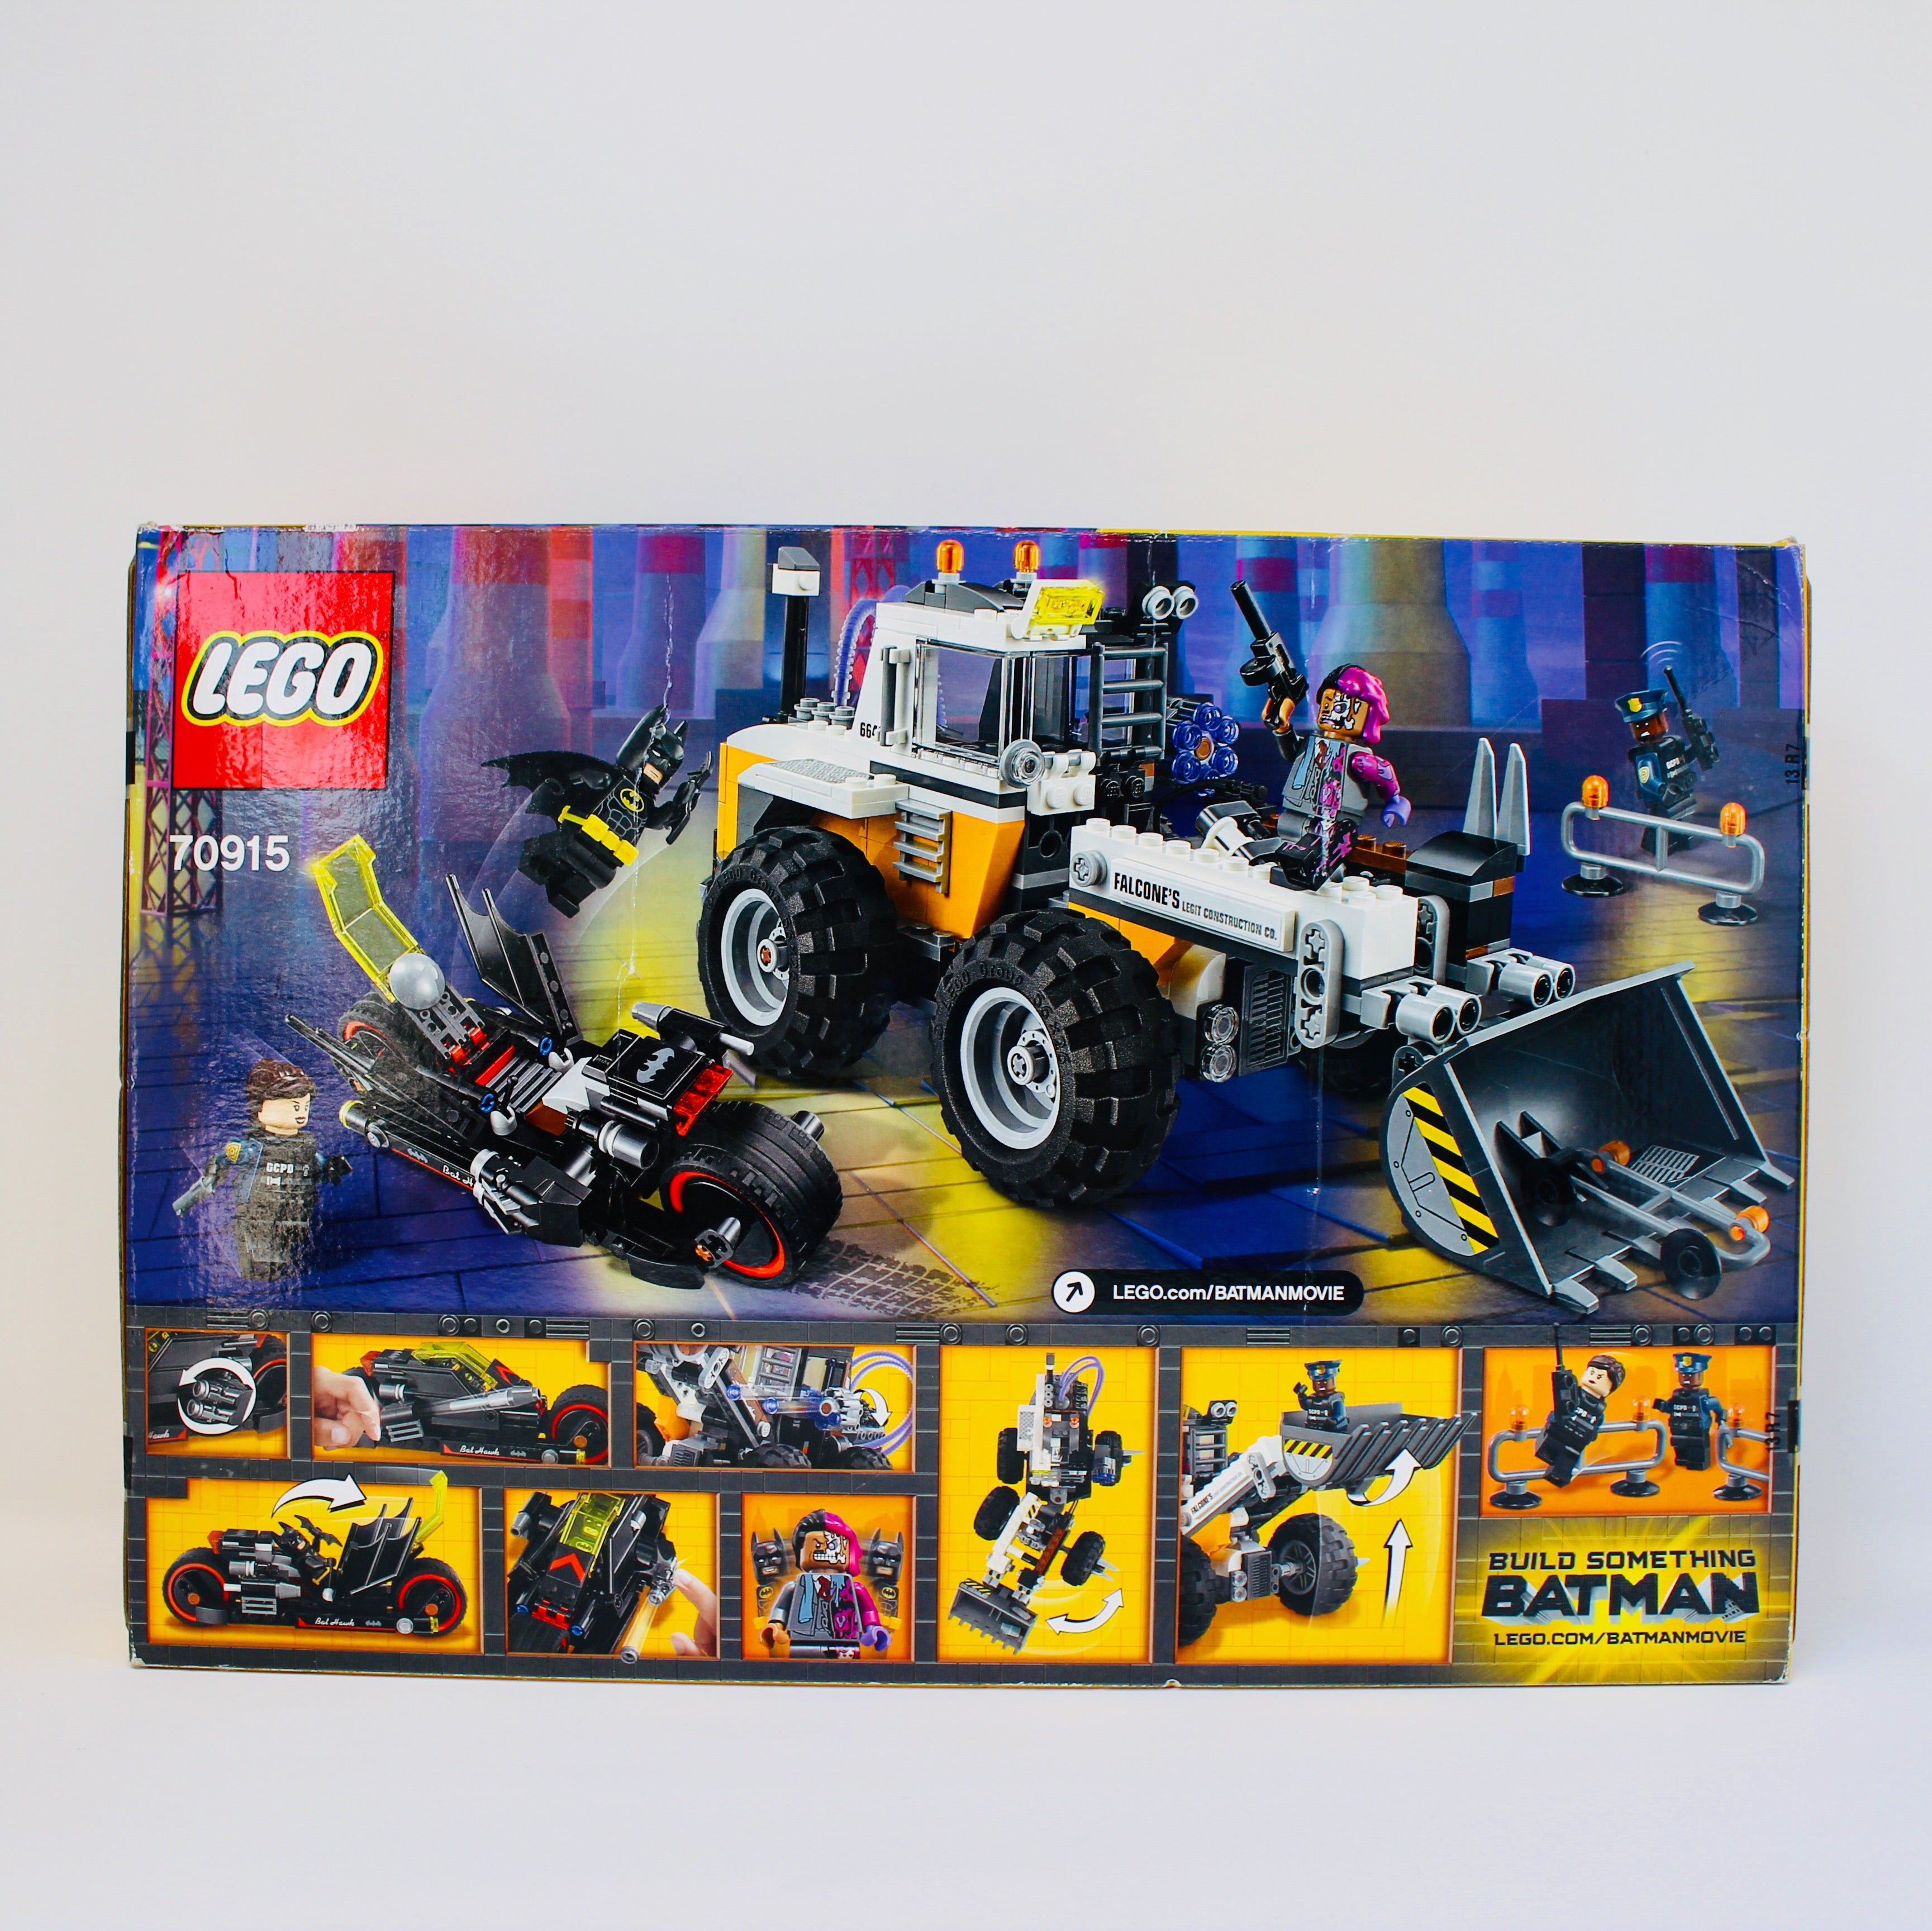 Retired Set 70915 The LEGO Batman Movie Two-Face Double Demolition